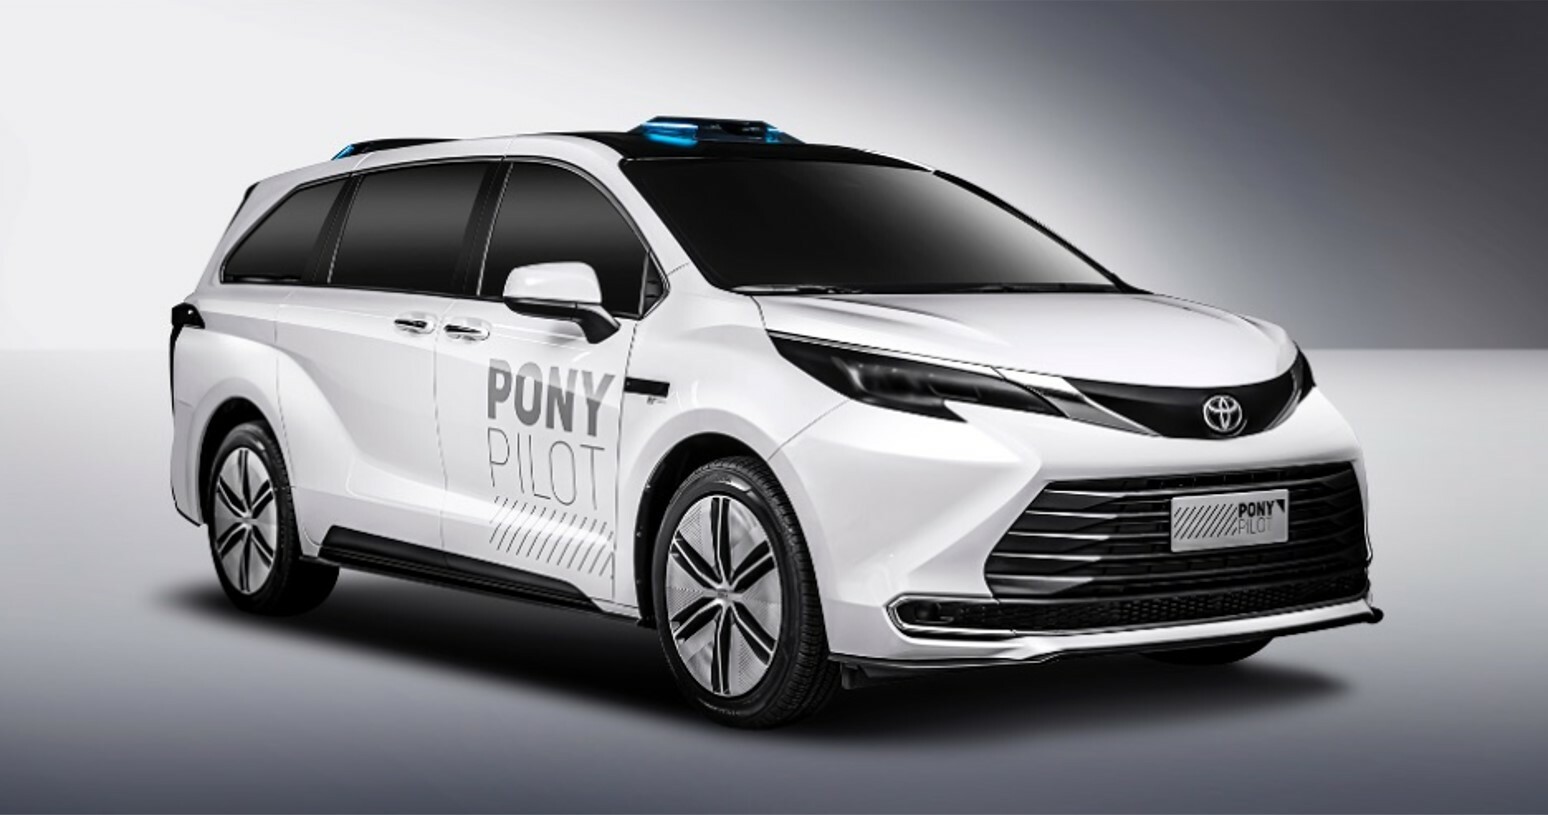 Pony.aiがNVIDIA DRIVE Orinを搭載した次世代型ロボタクシーを発表